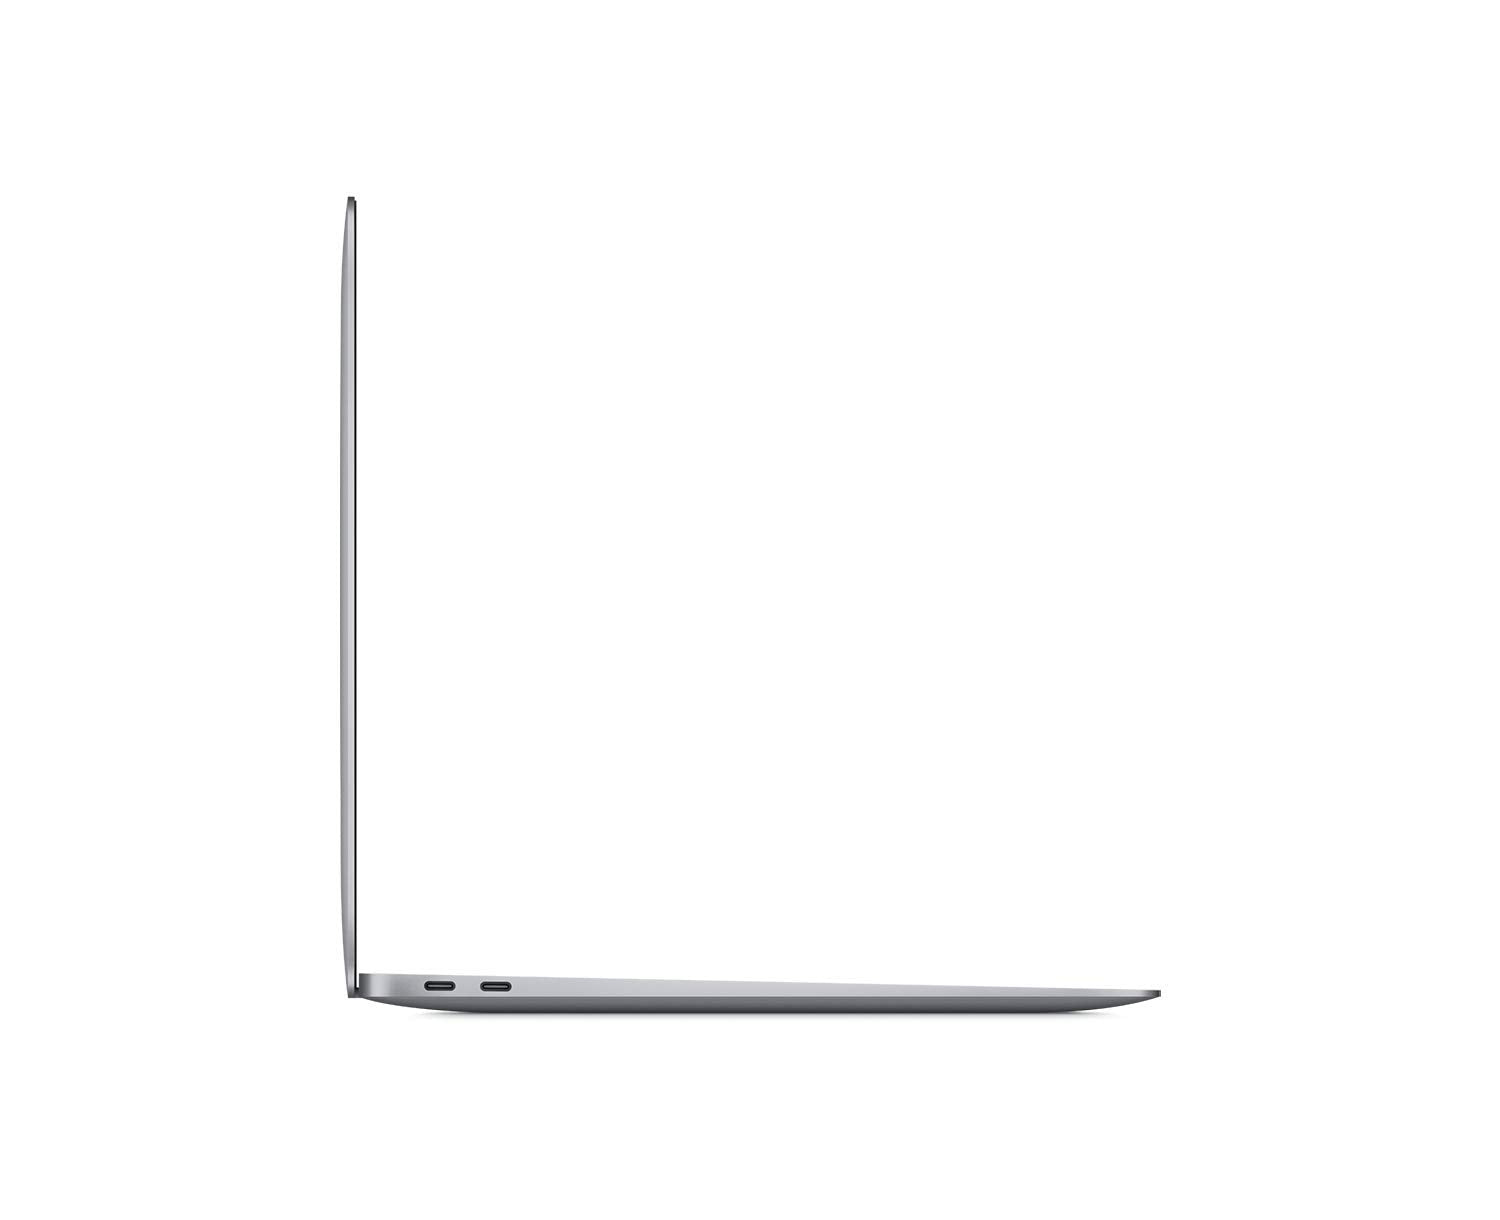 Apple MacBook Air (13-inch, 1.6GHz dual-core Intel&nbsp;Core i5, 8GB RAM, 128GB) - Space Grey (Latest Model)